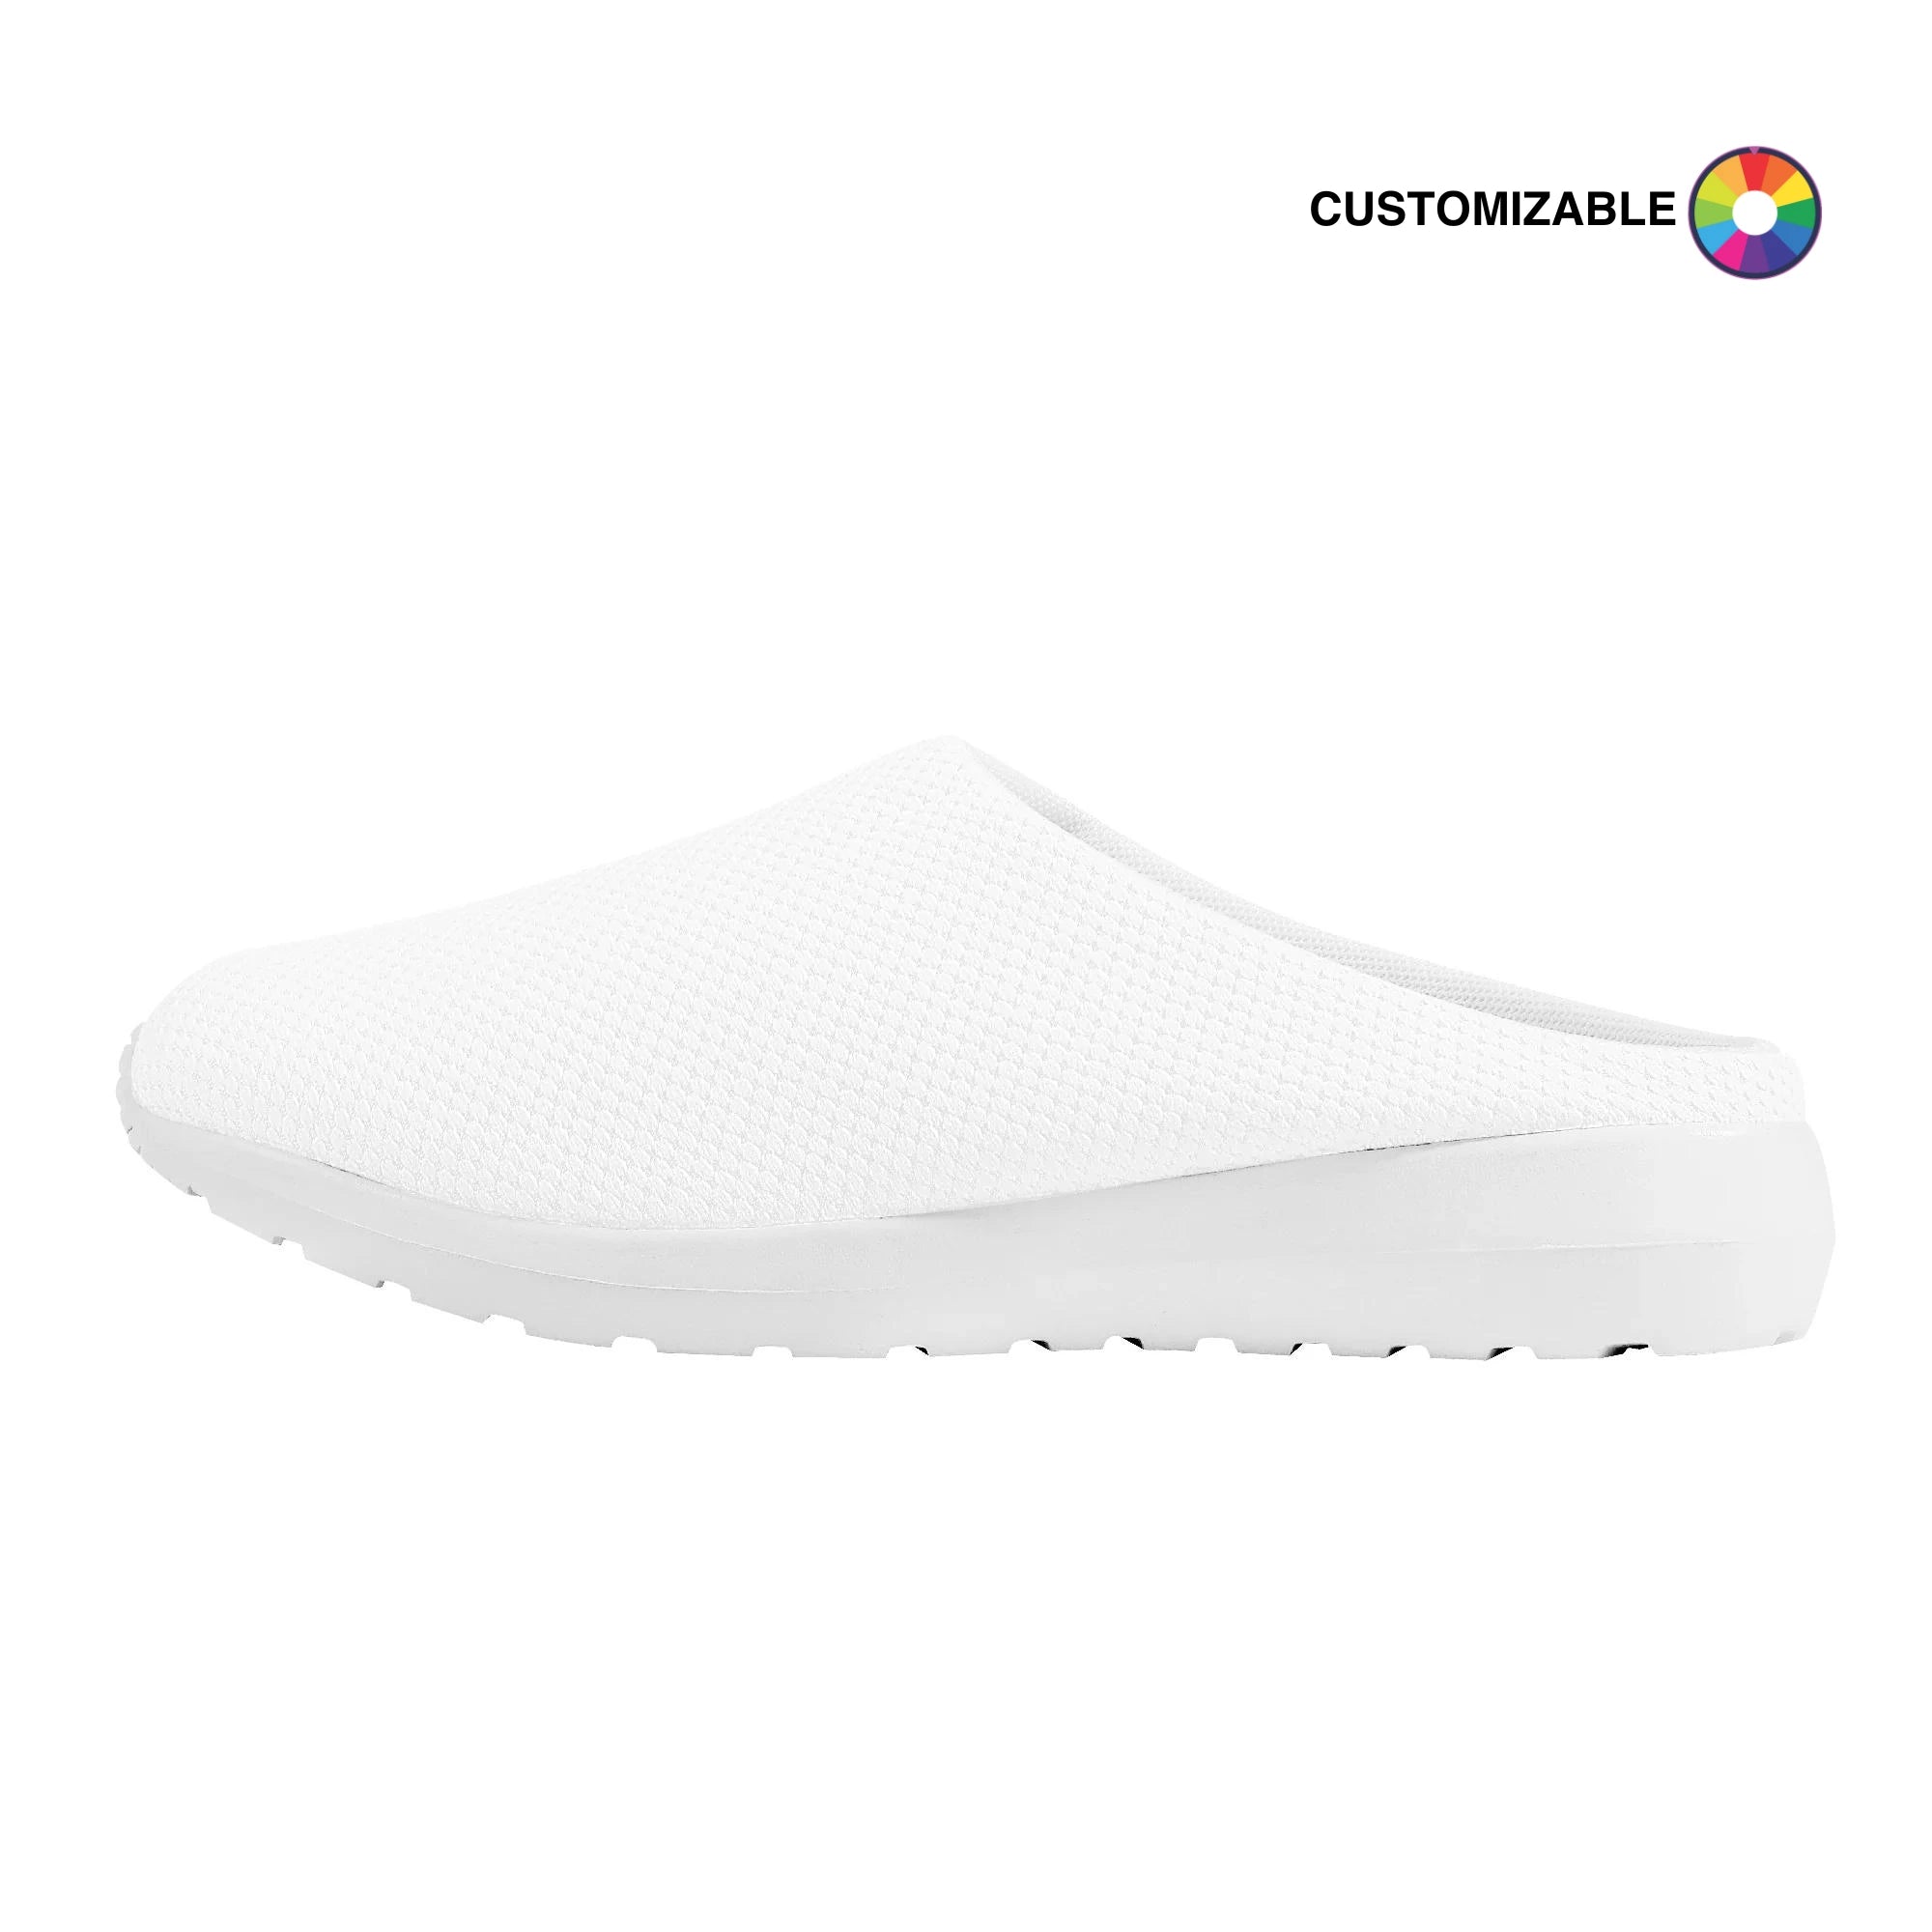 Customizable Mesh Slipper | Design your own | Shoe Zero